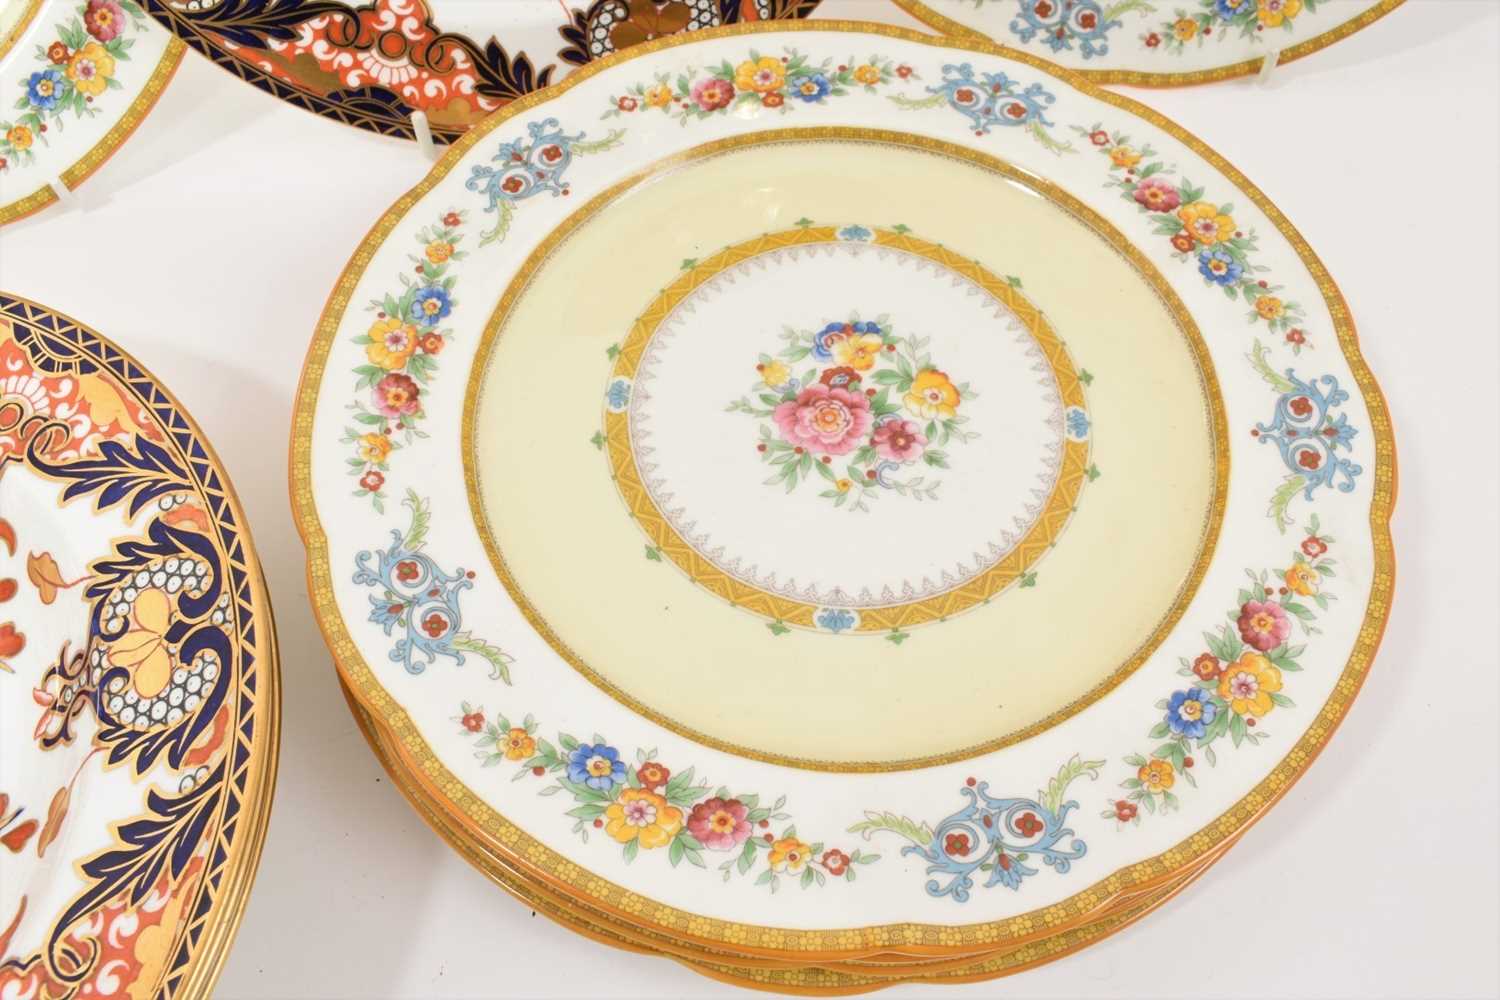 Set of five Royal Crown Derby King's pattern deep plates, 26cm diameter - Image 3 of 3